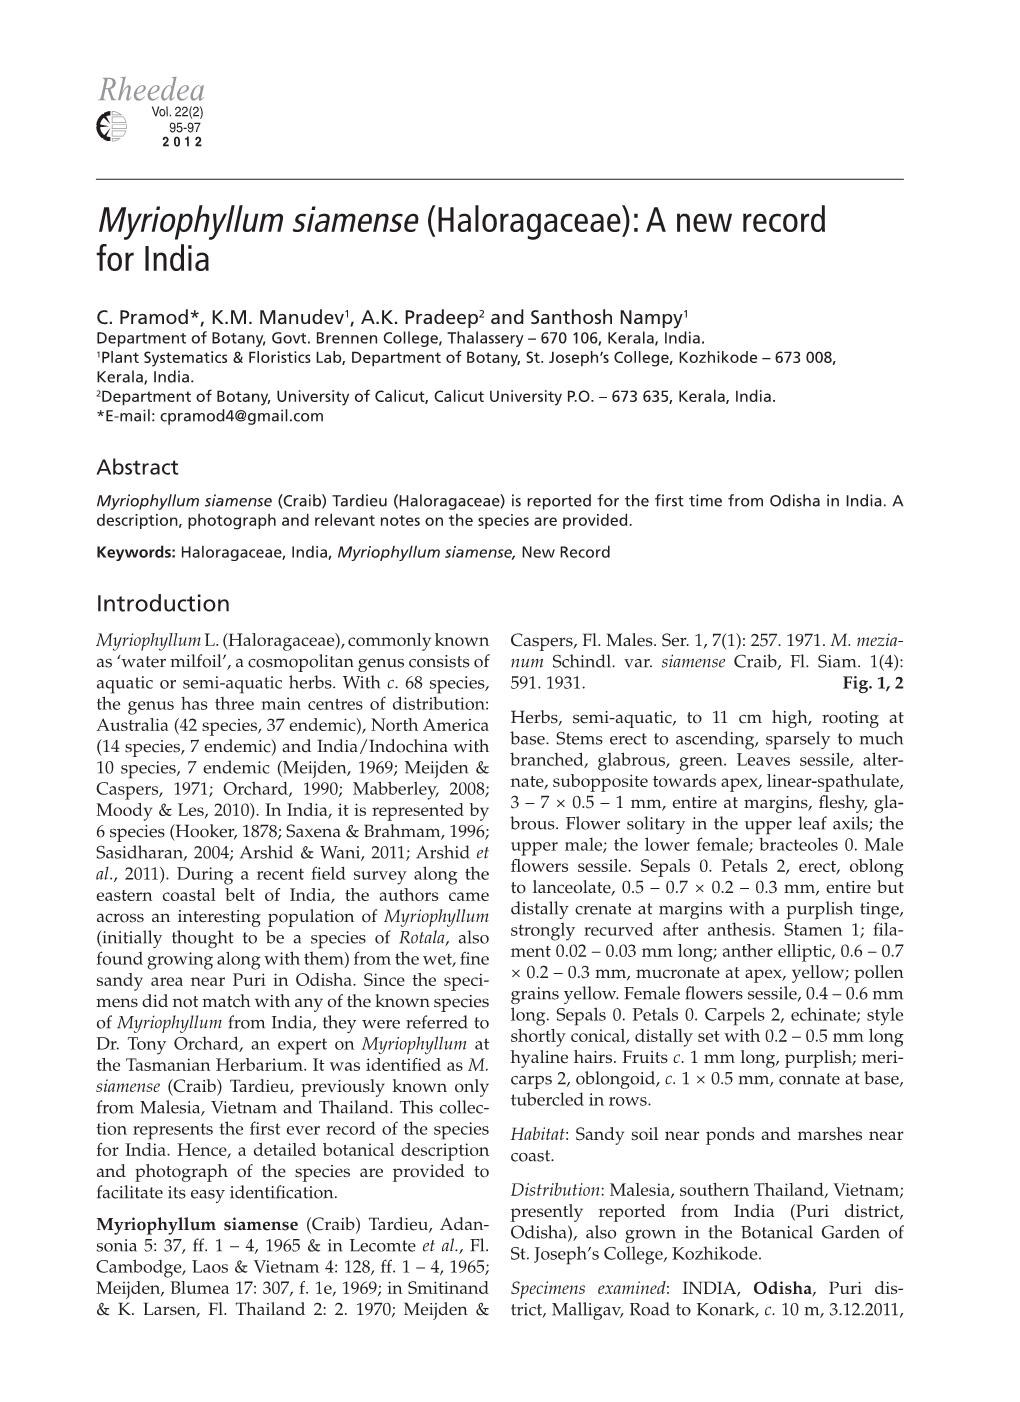 Myriophyllum Siamense (Haloragaceae): a New Record for India